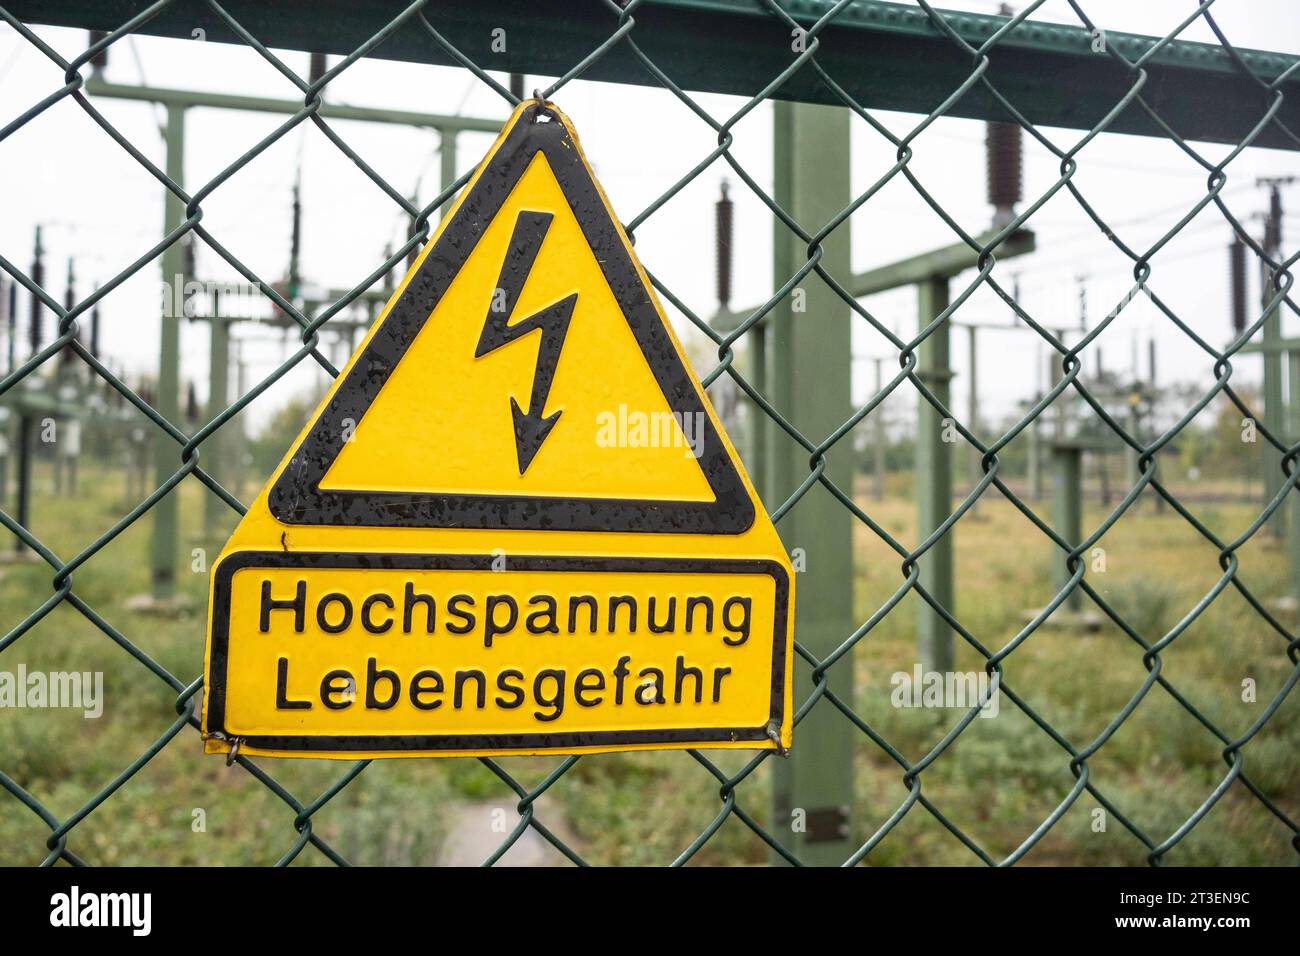 Symbolbild: Hochspannung Lebensgefahr. *** Symbol image high voltage danger to life Credit: Imago/Alamy Live News Stock Photo